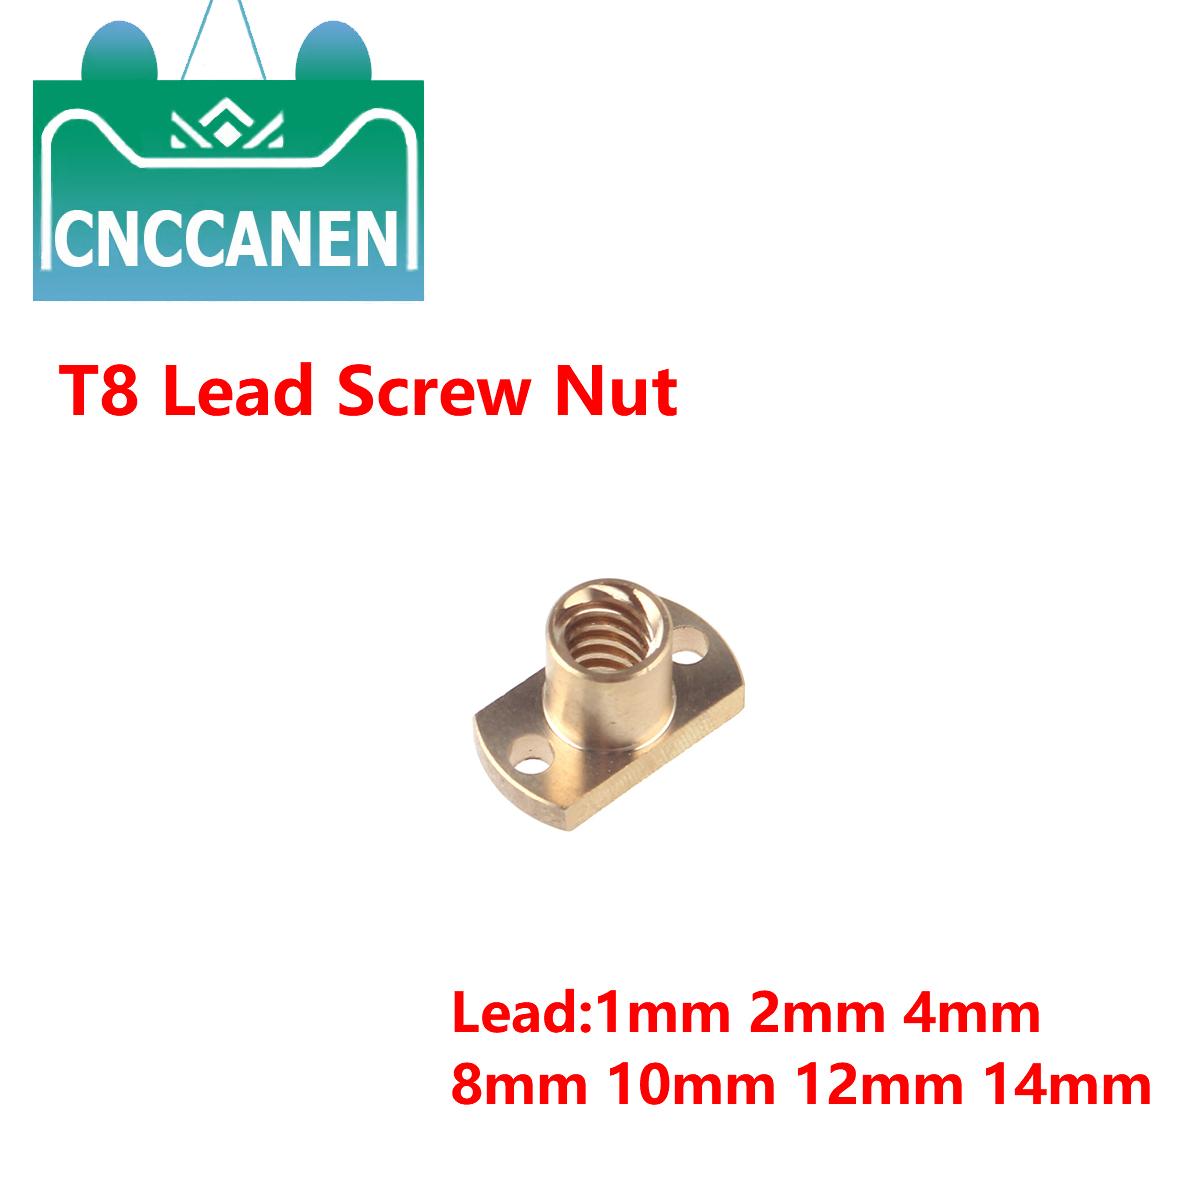 Изображение товара: Медная гайка с фланцем T8 Nut H для свинцового винта T8, шаг 2 мм, свинцовый 2 мм, 4 мм, 8 мм, 12 мм для трапециевидного винта T8, детали для 3D-принтера